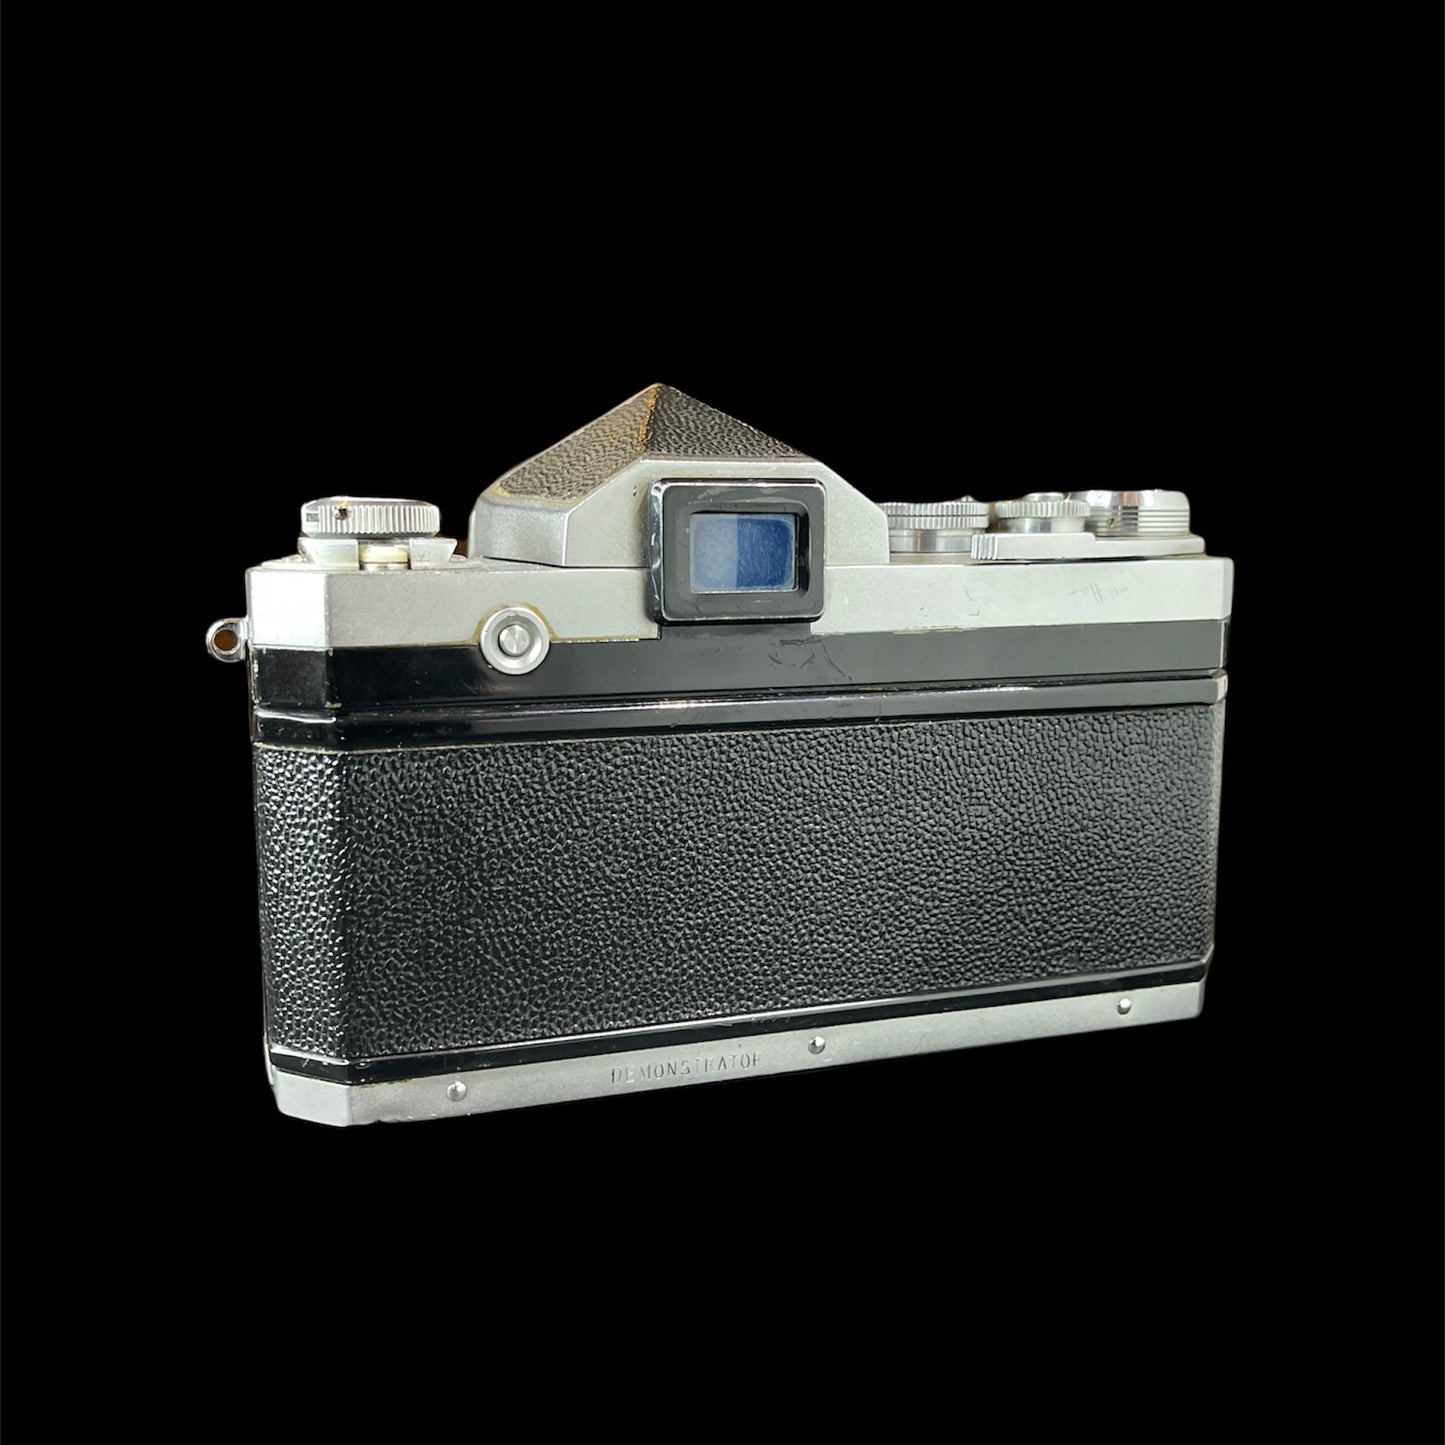 Nikon F 1959 Demonstrator B#6409787